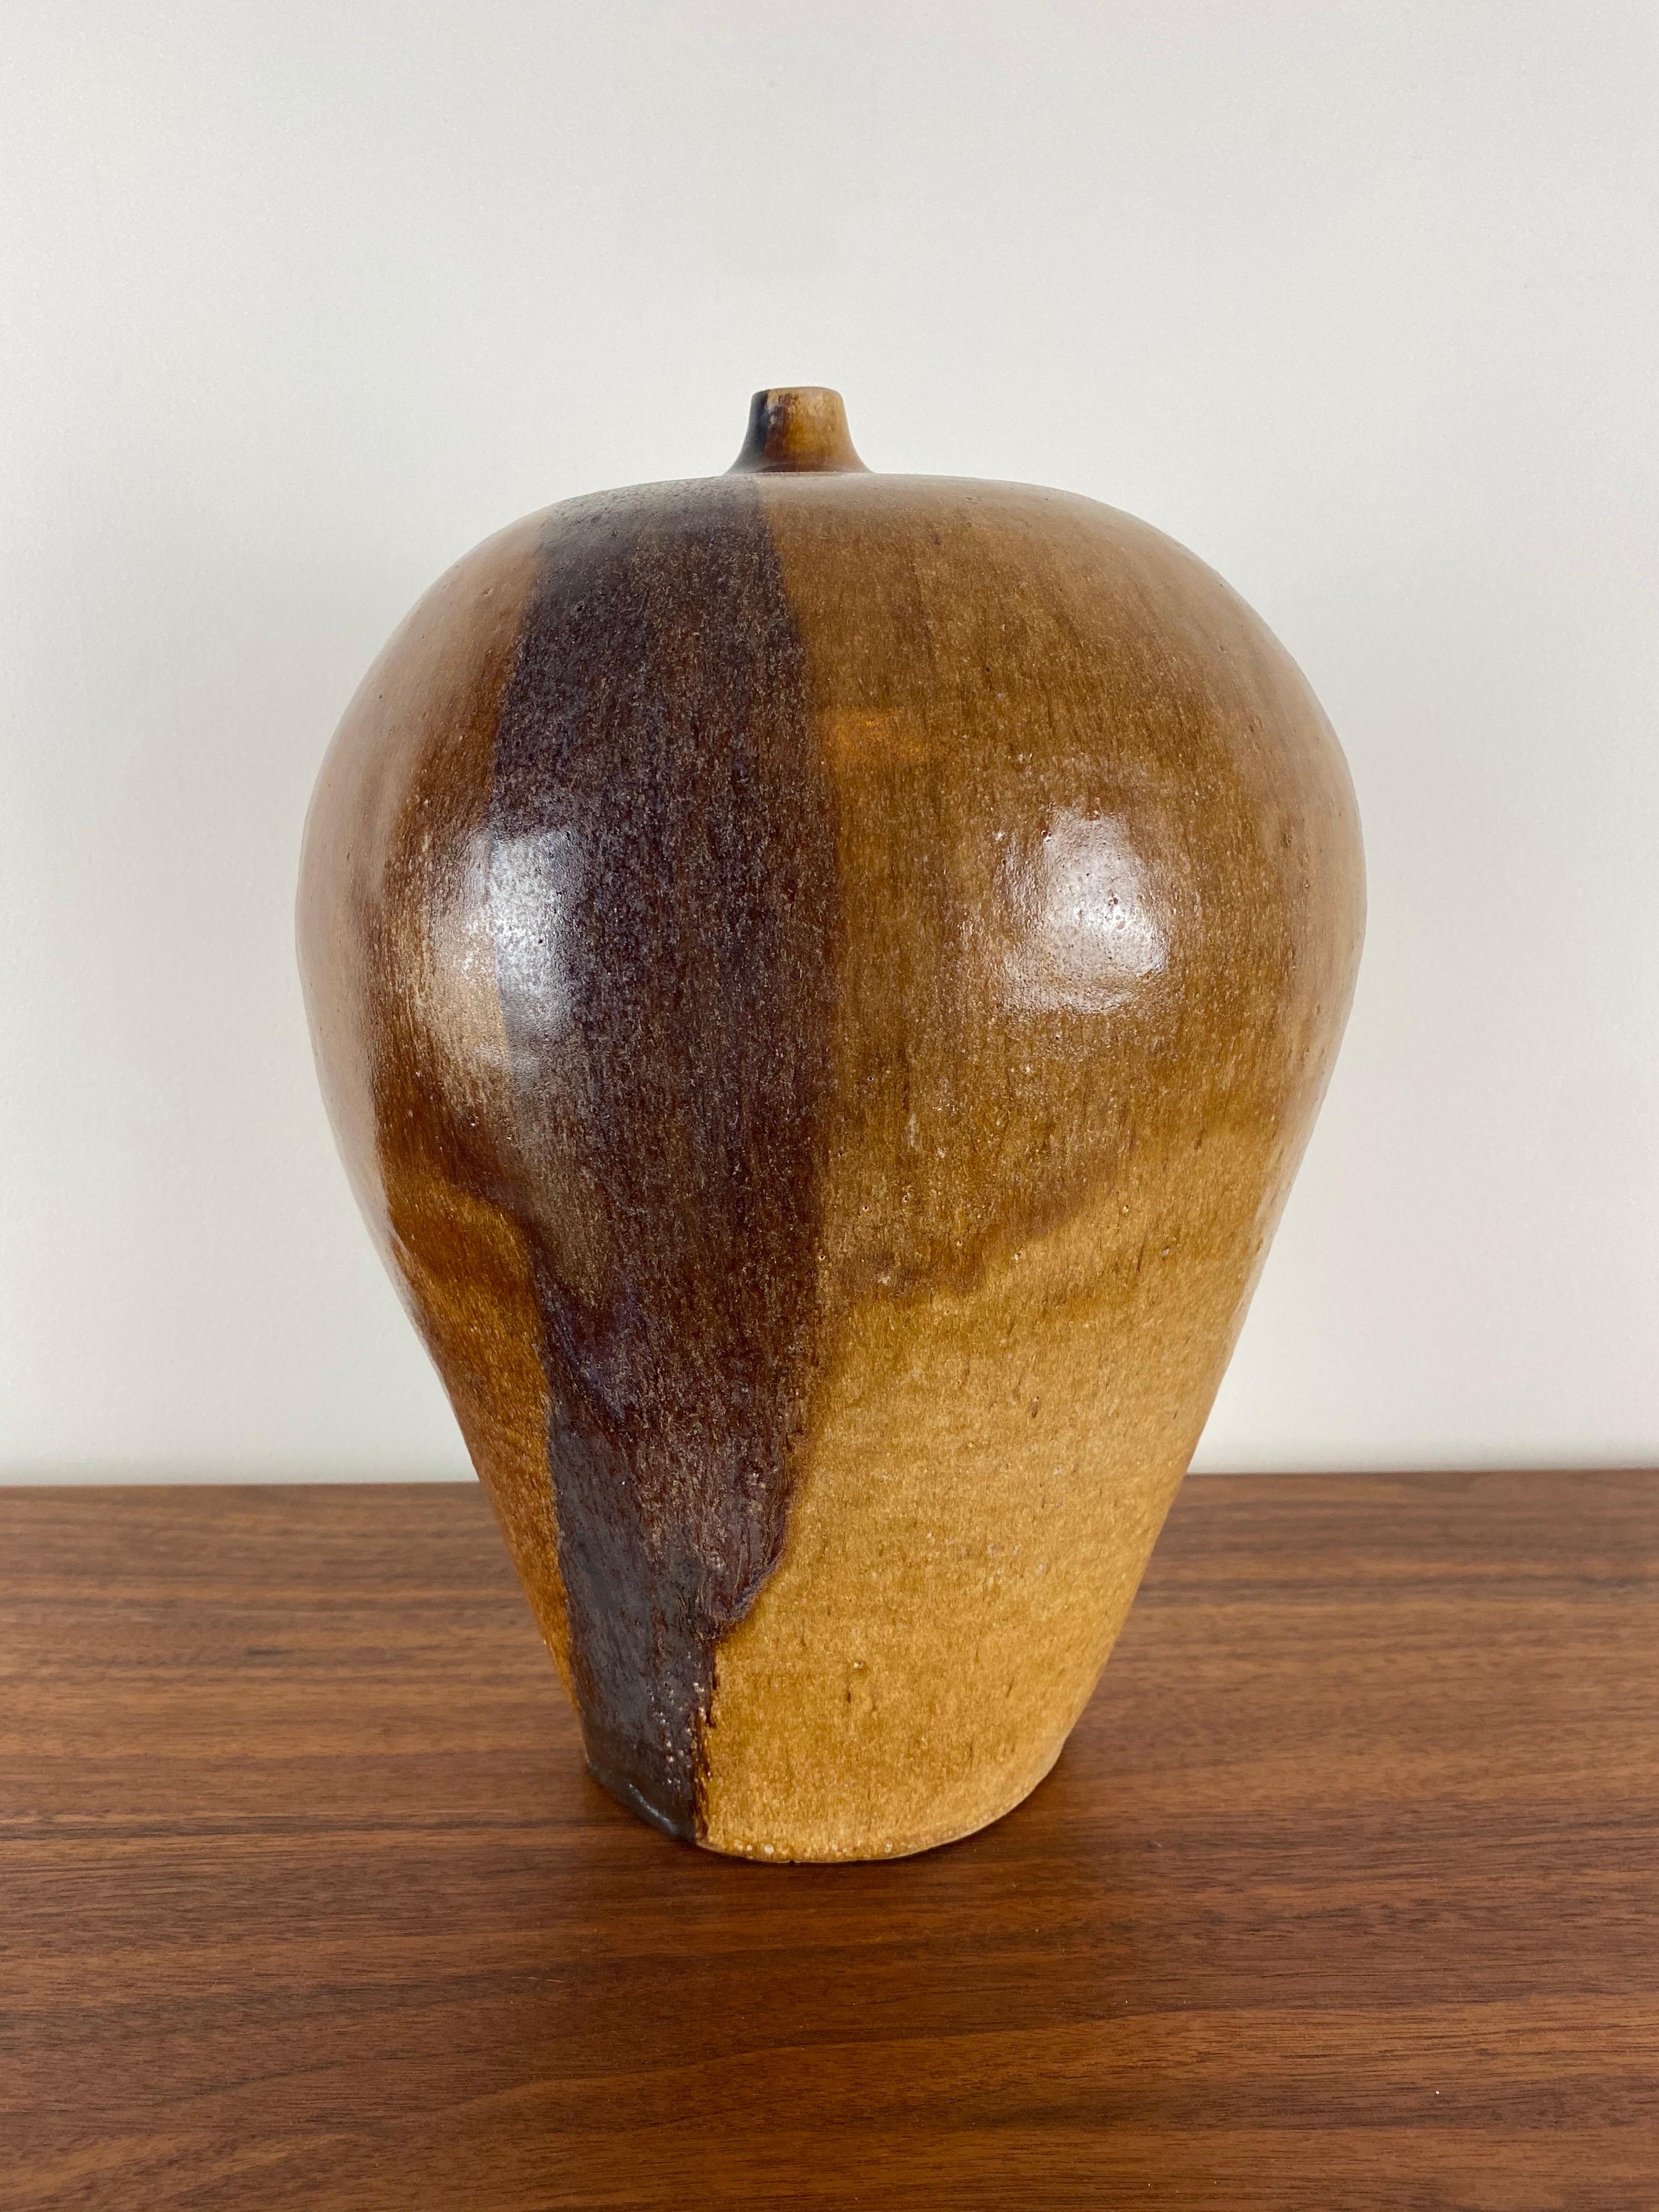 Earth-toned glaze to this large ceramic vase.

free shipping.